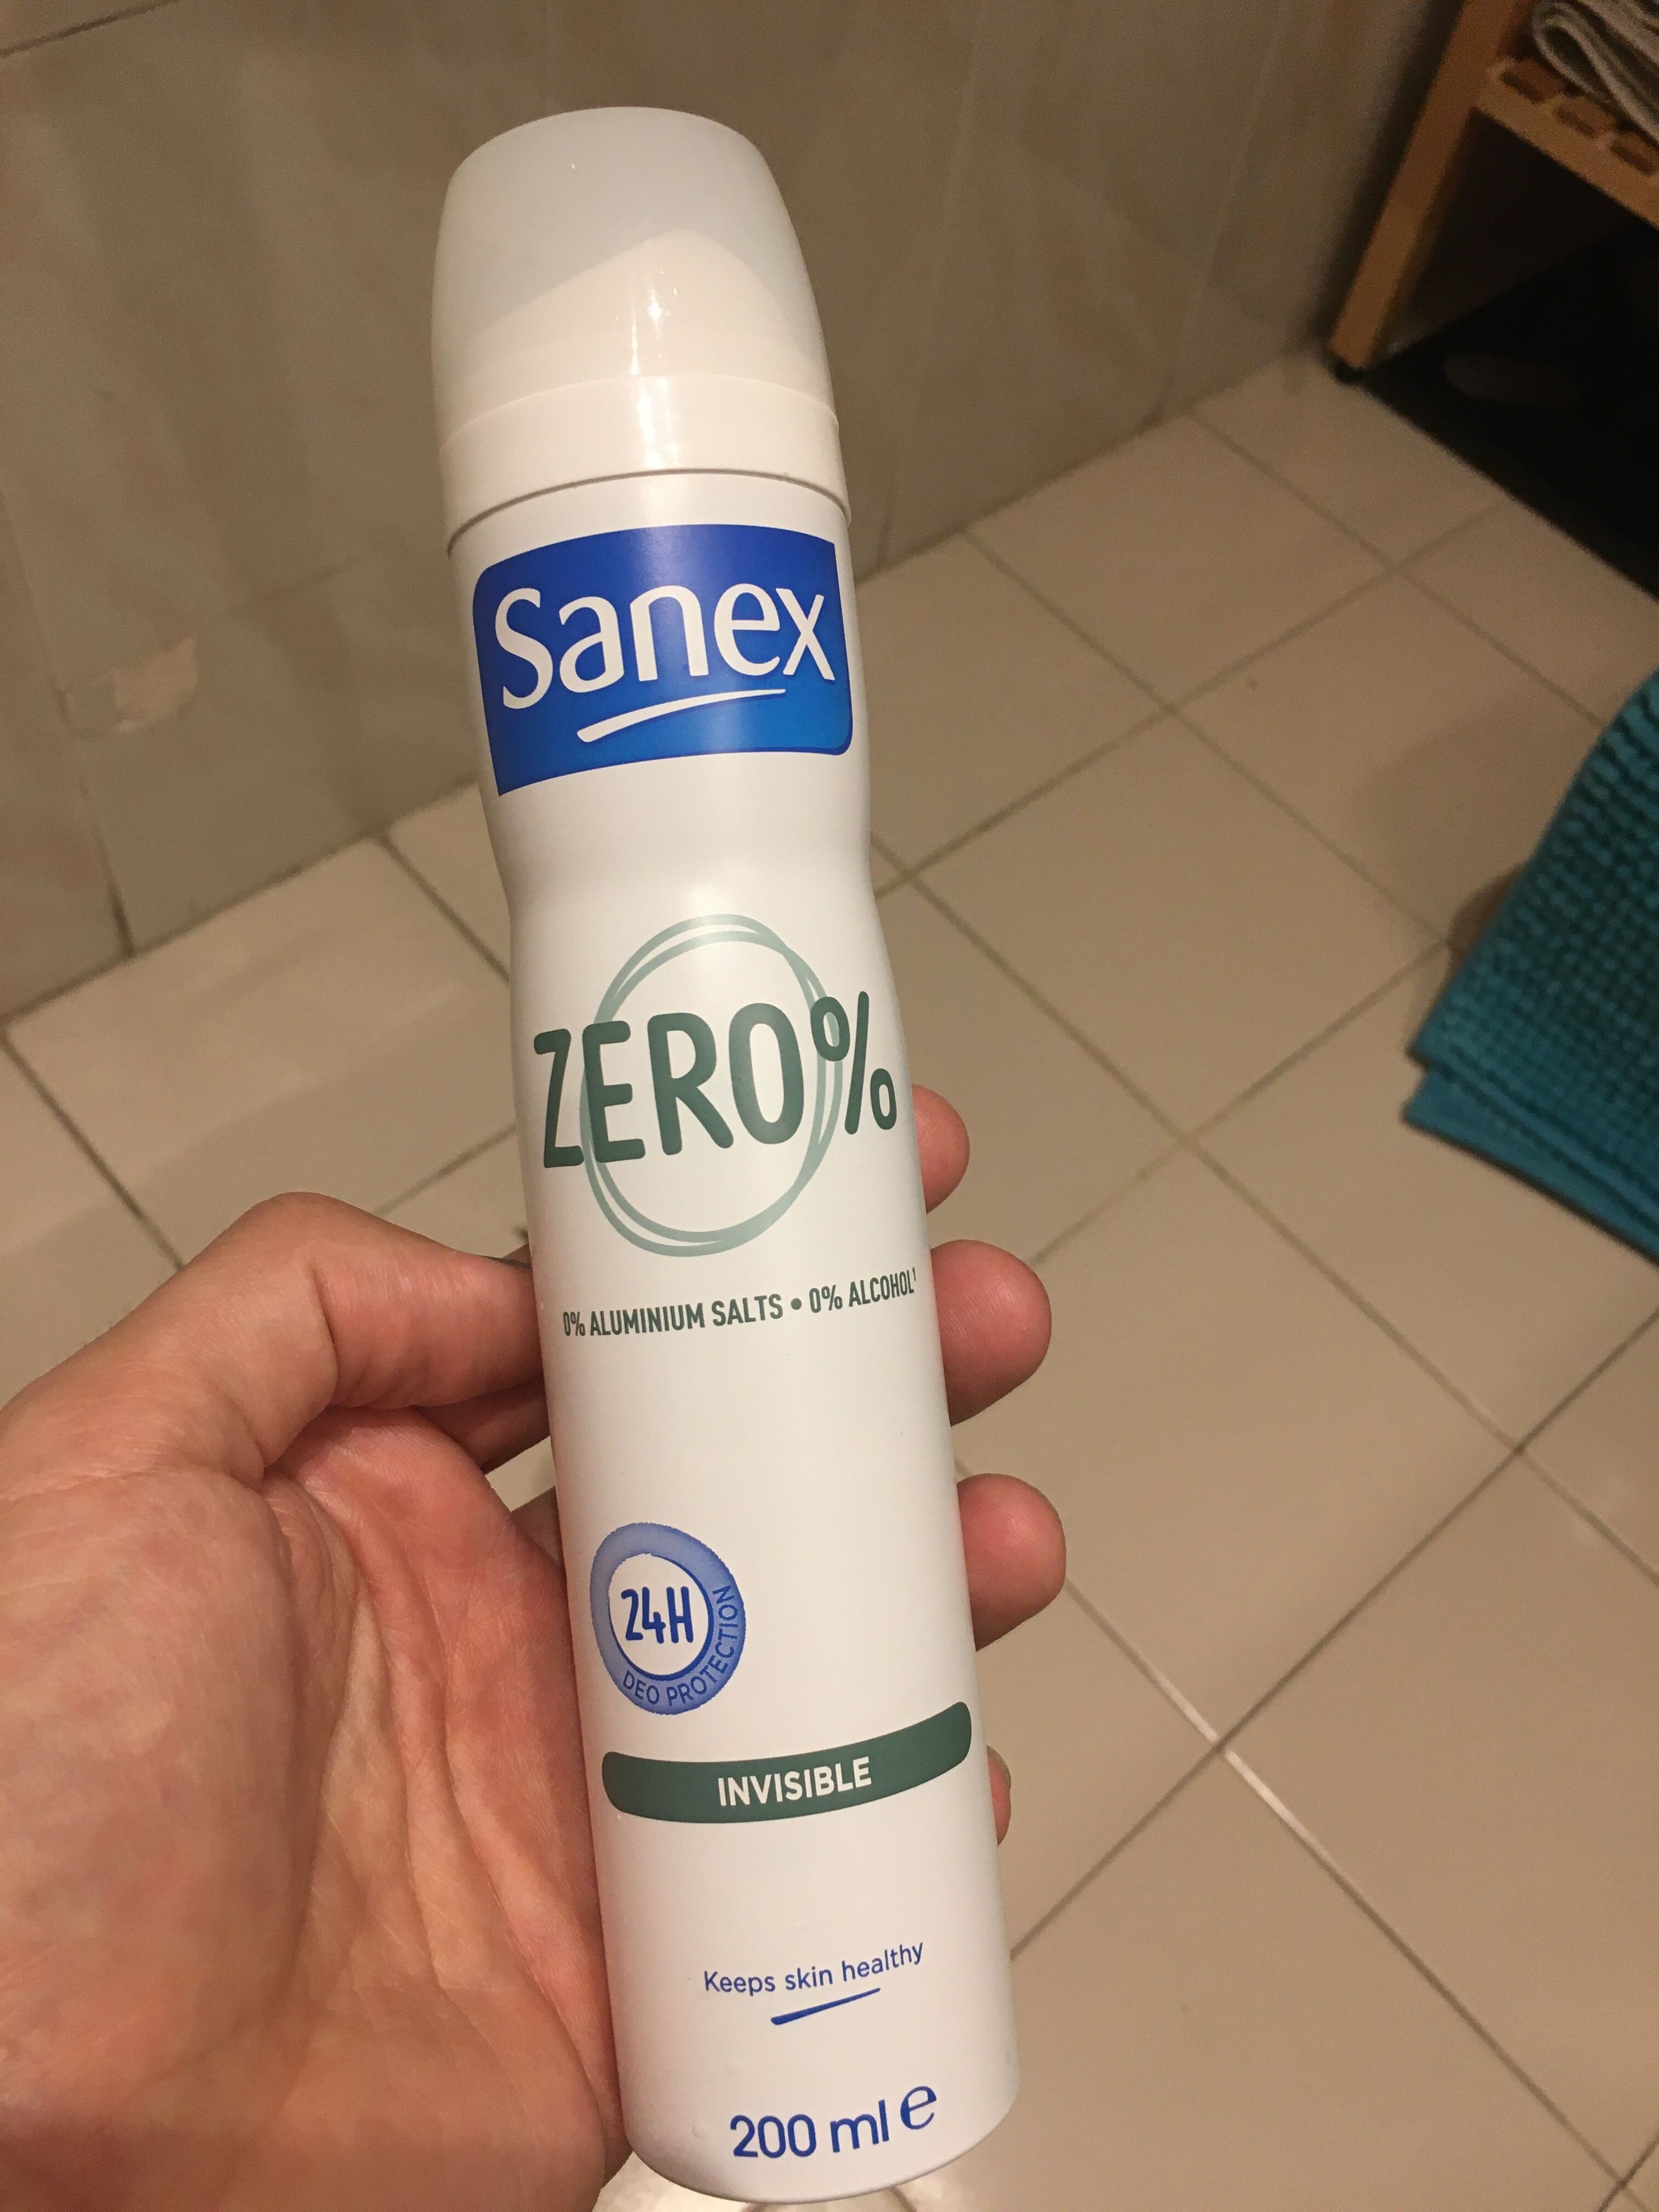 Sanex zero% - Tuote - en